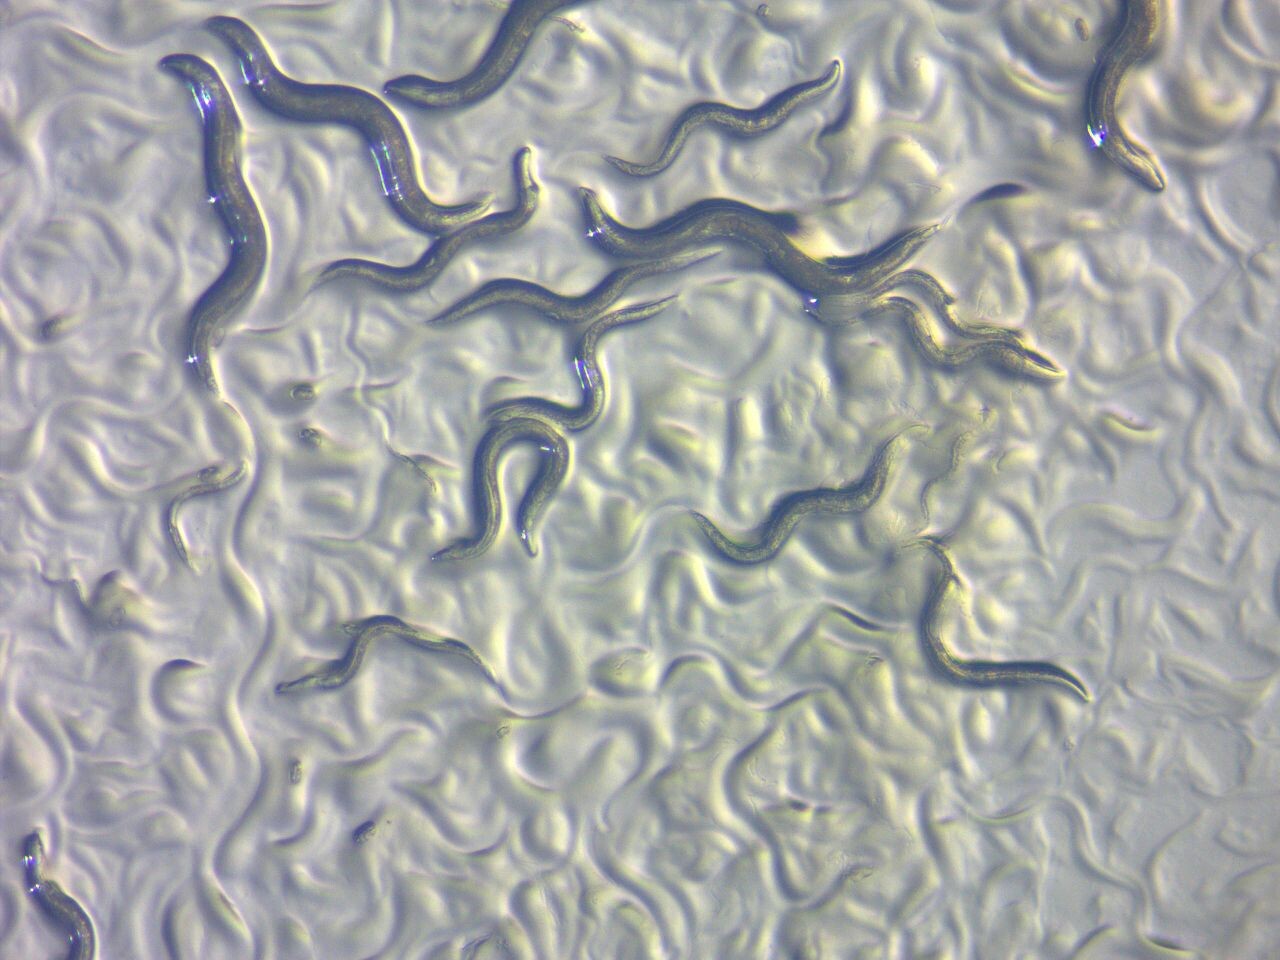 C. elegans under microscope